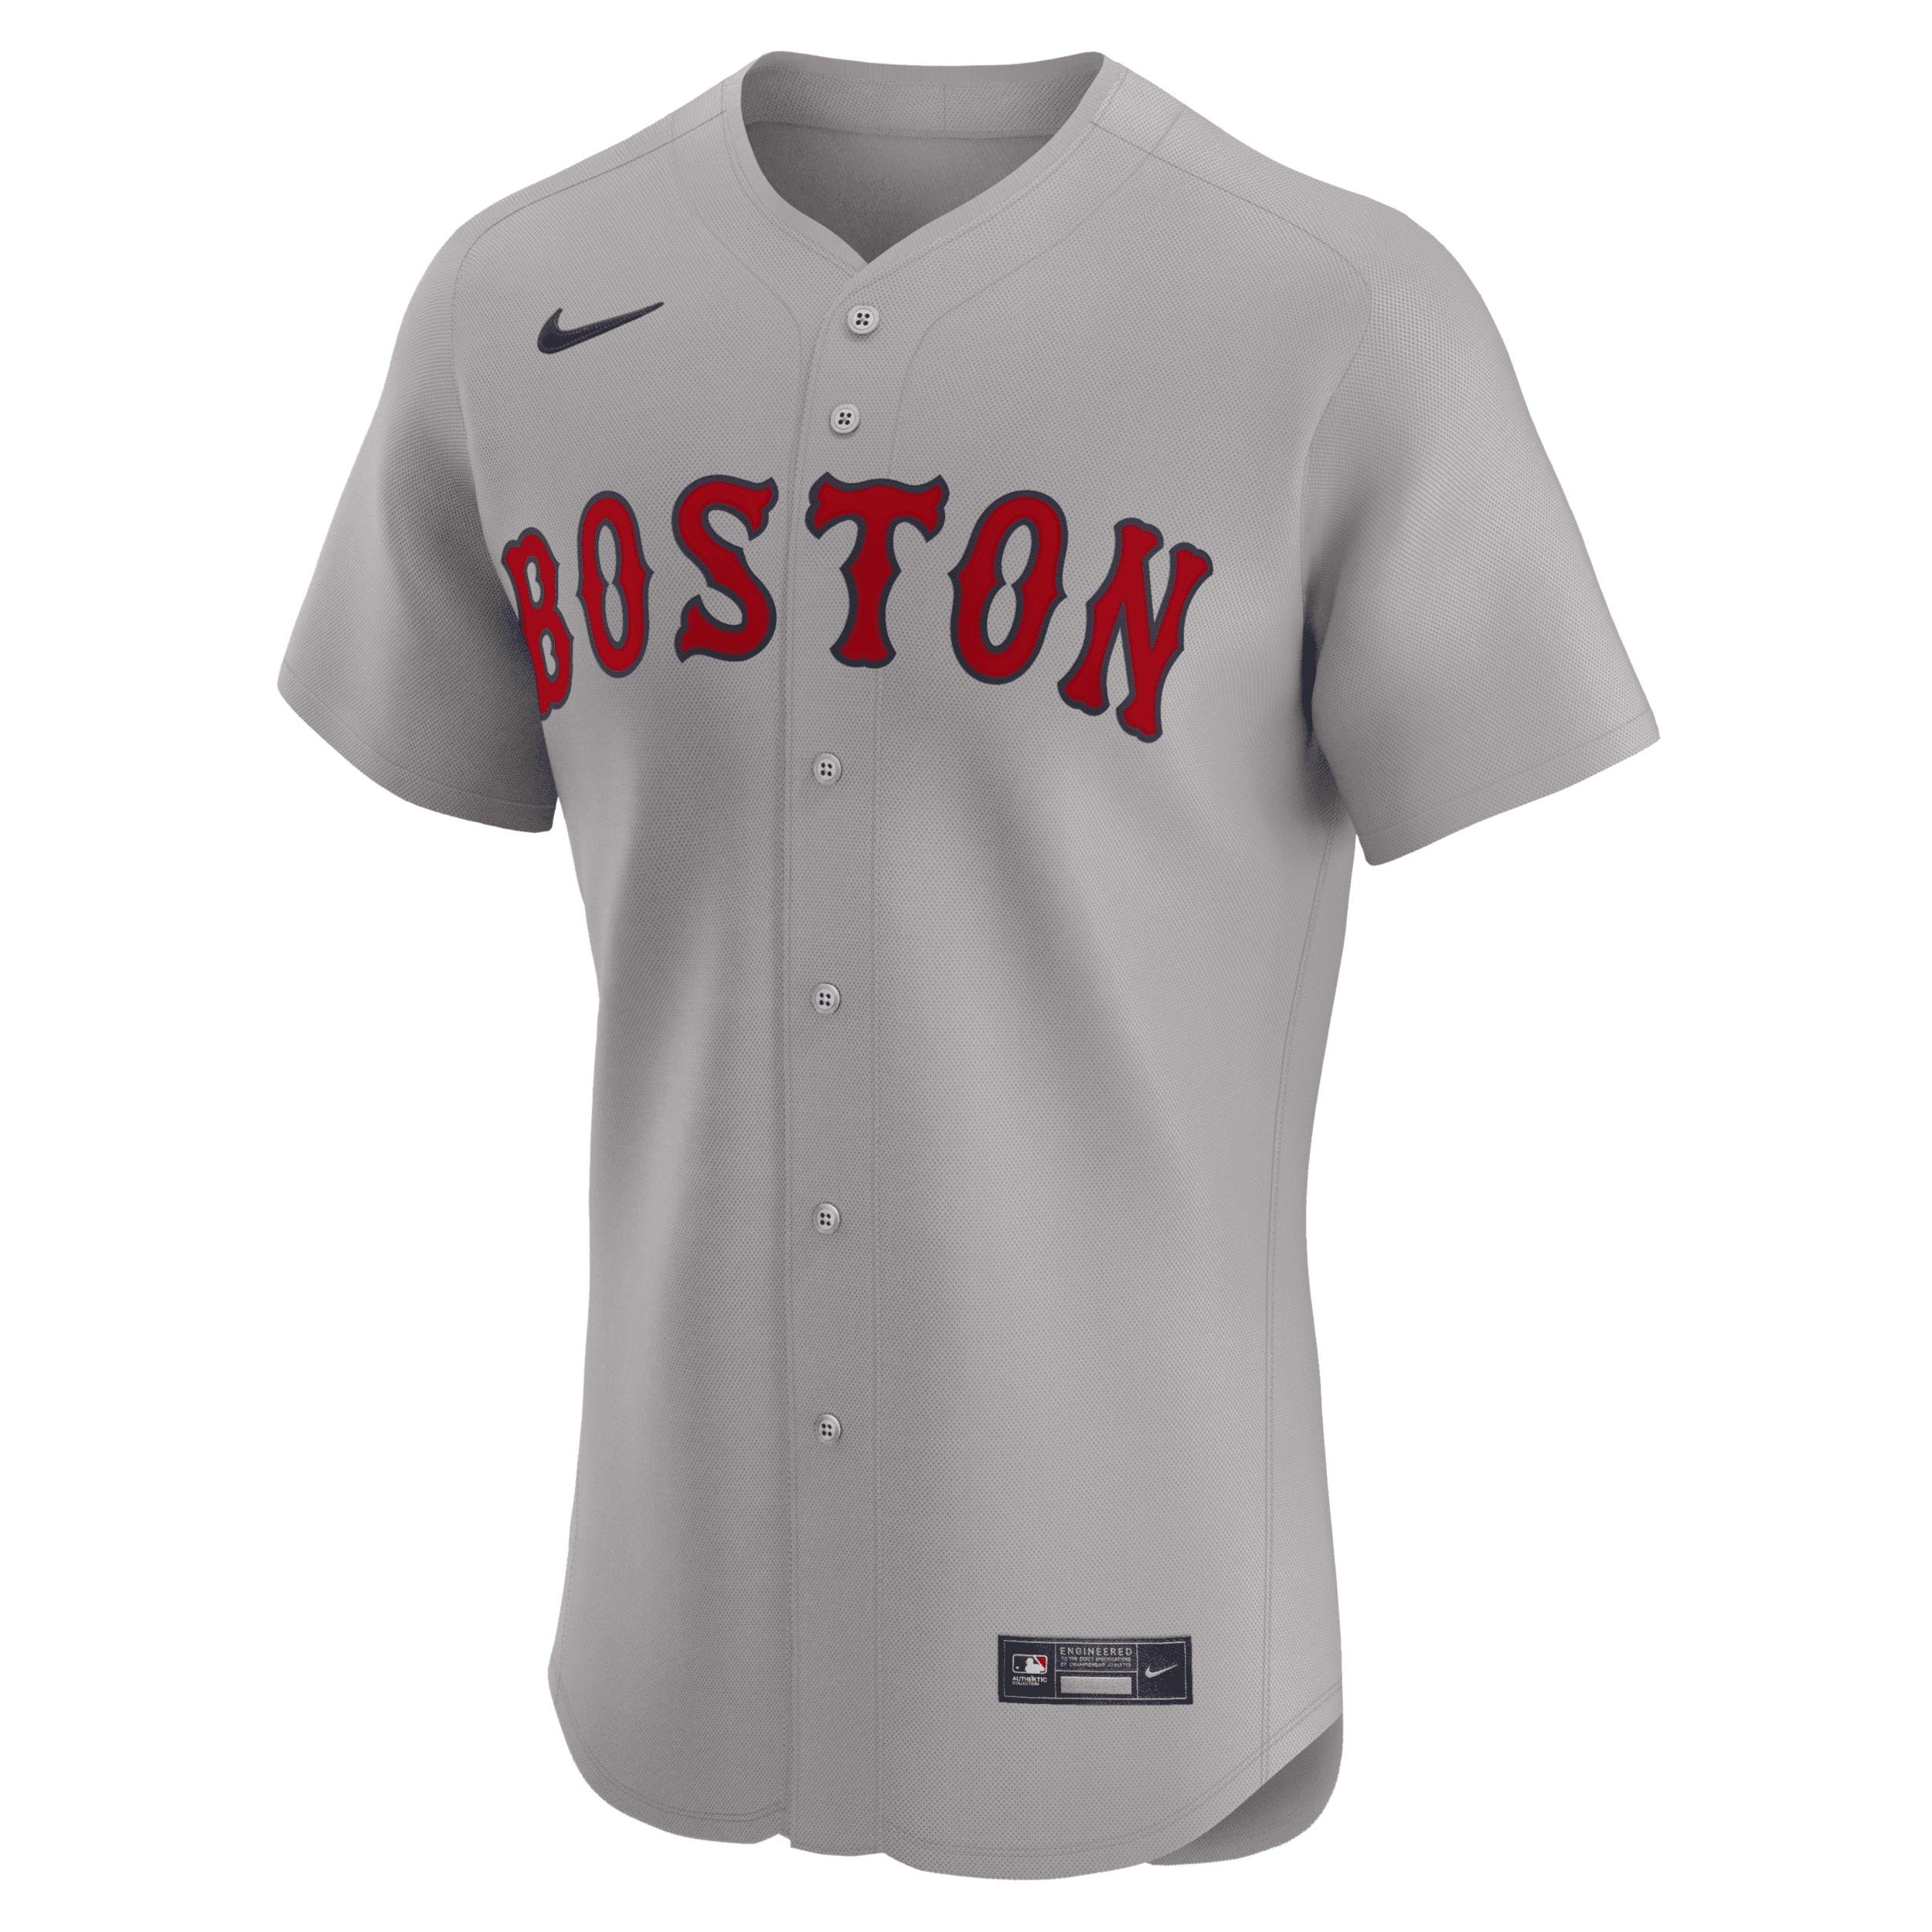 David Ortiz Boston Red Sox Nike Men's Dri-FIT ADV MLB Elite Jersey by NIKE